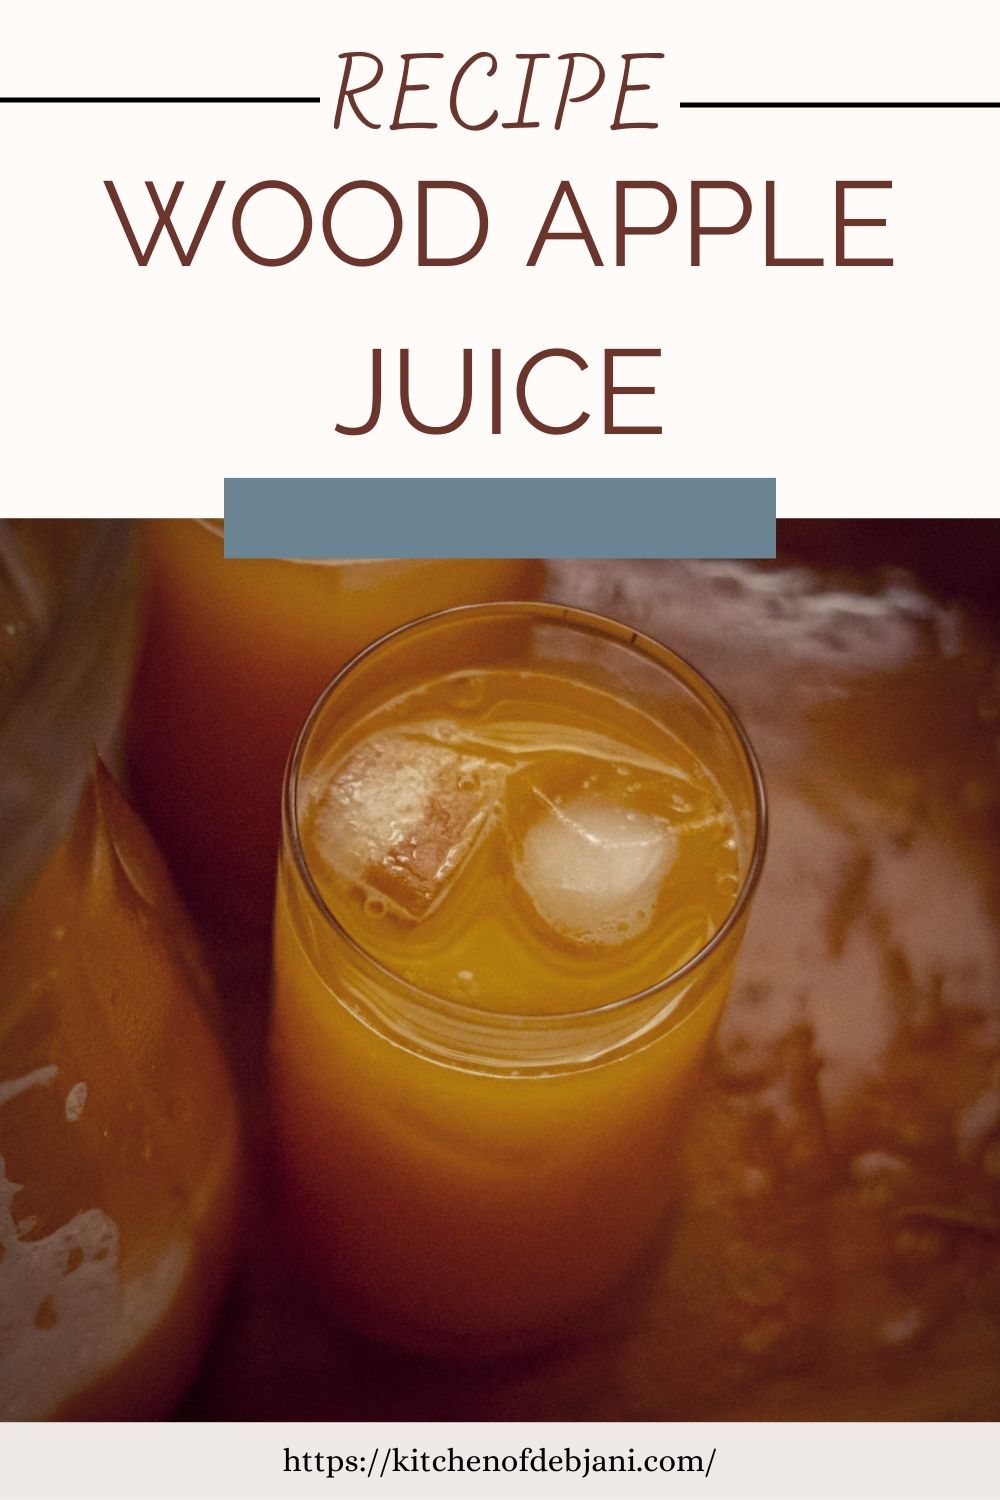 %Wood Apple Juice Recipe Photo Food Pinterest Pin